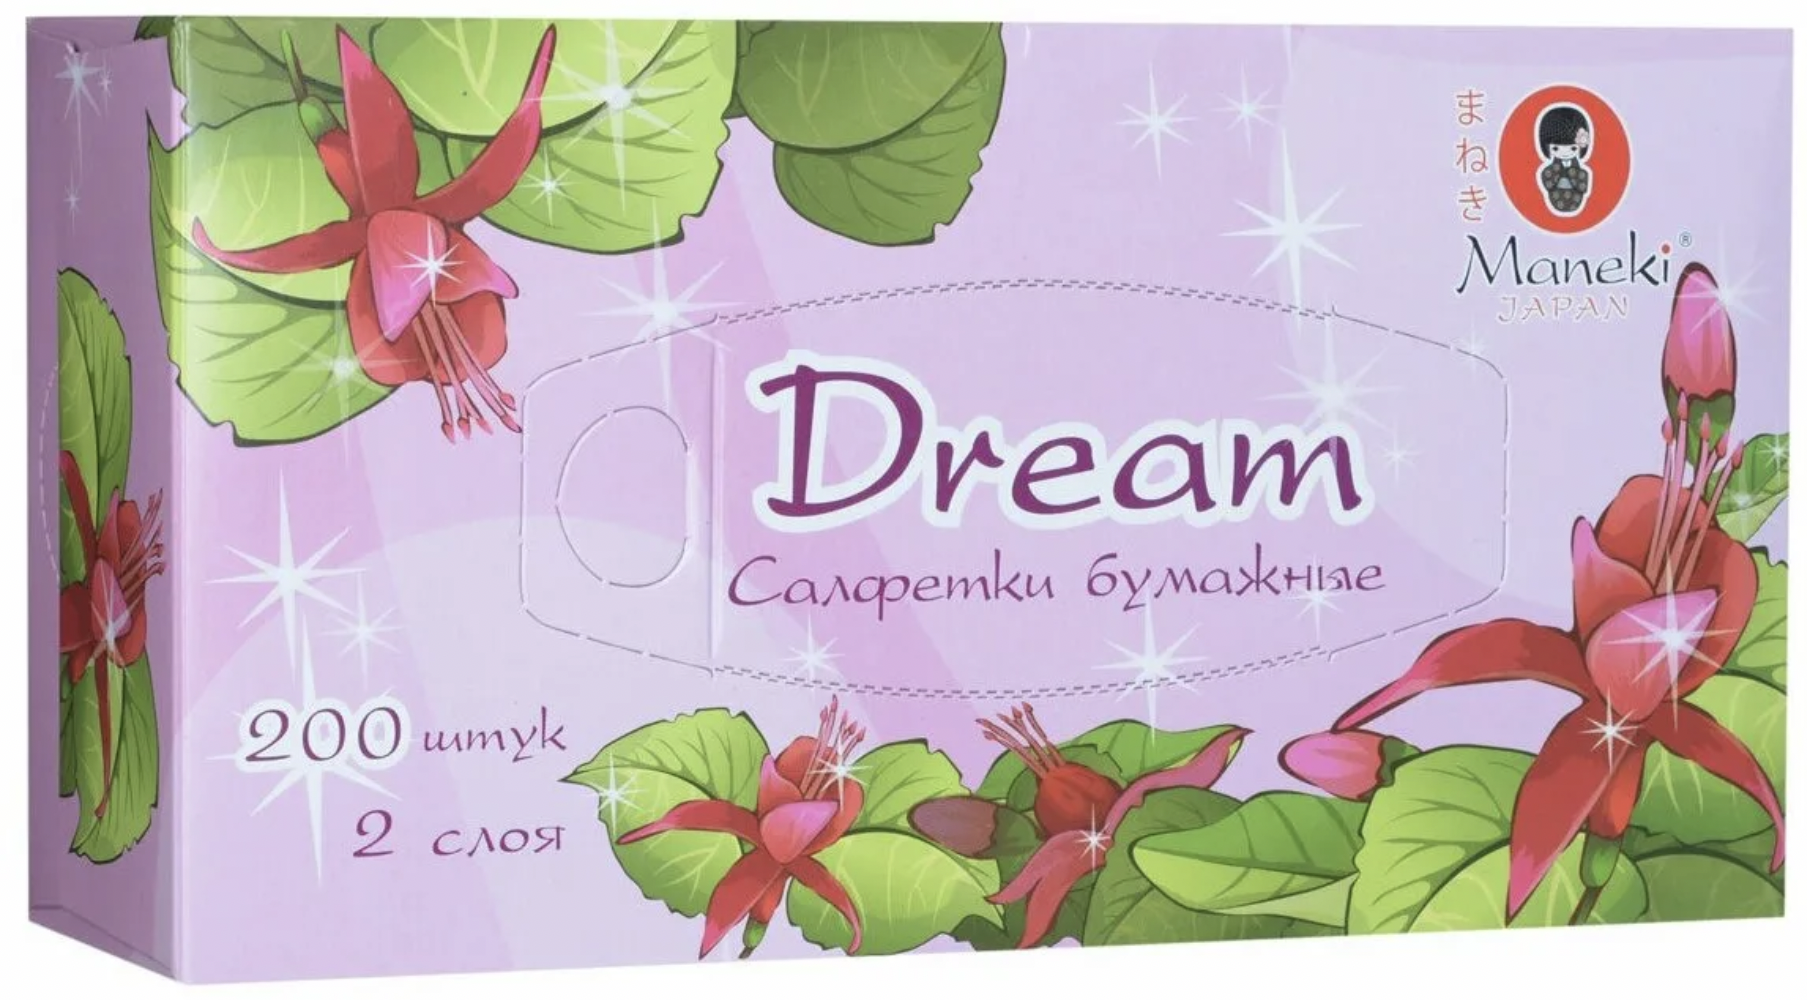 Dream 200. Салфетки Maneki Dream (ft135), 200 шт.. Салфетки бумажные mioki 200 шт. Салфетки бумажные Манеки Дрим 2сл белые 200шт. Салфетки бумажные Maneki Dream 2-сл.белые 200шт Япония.